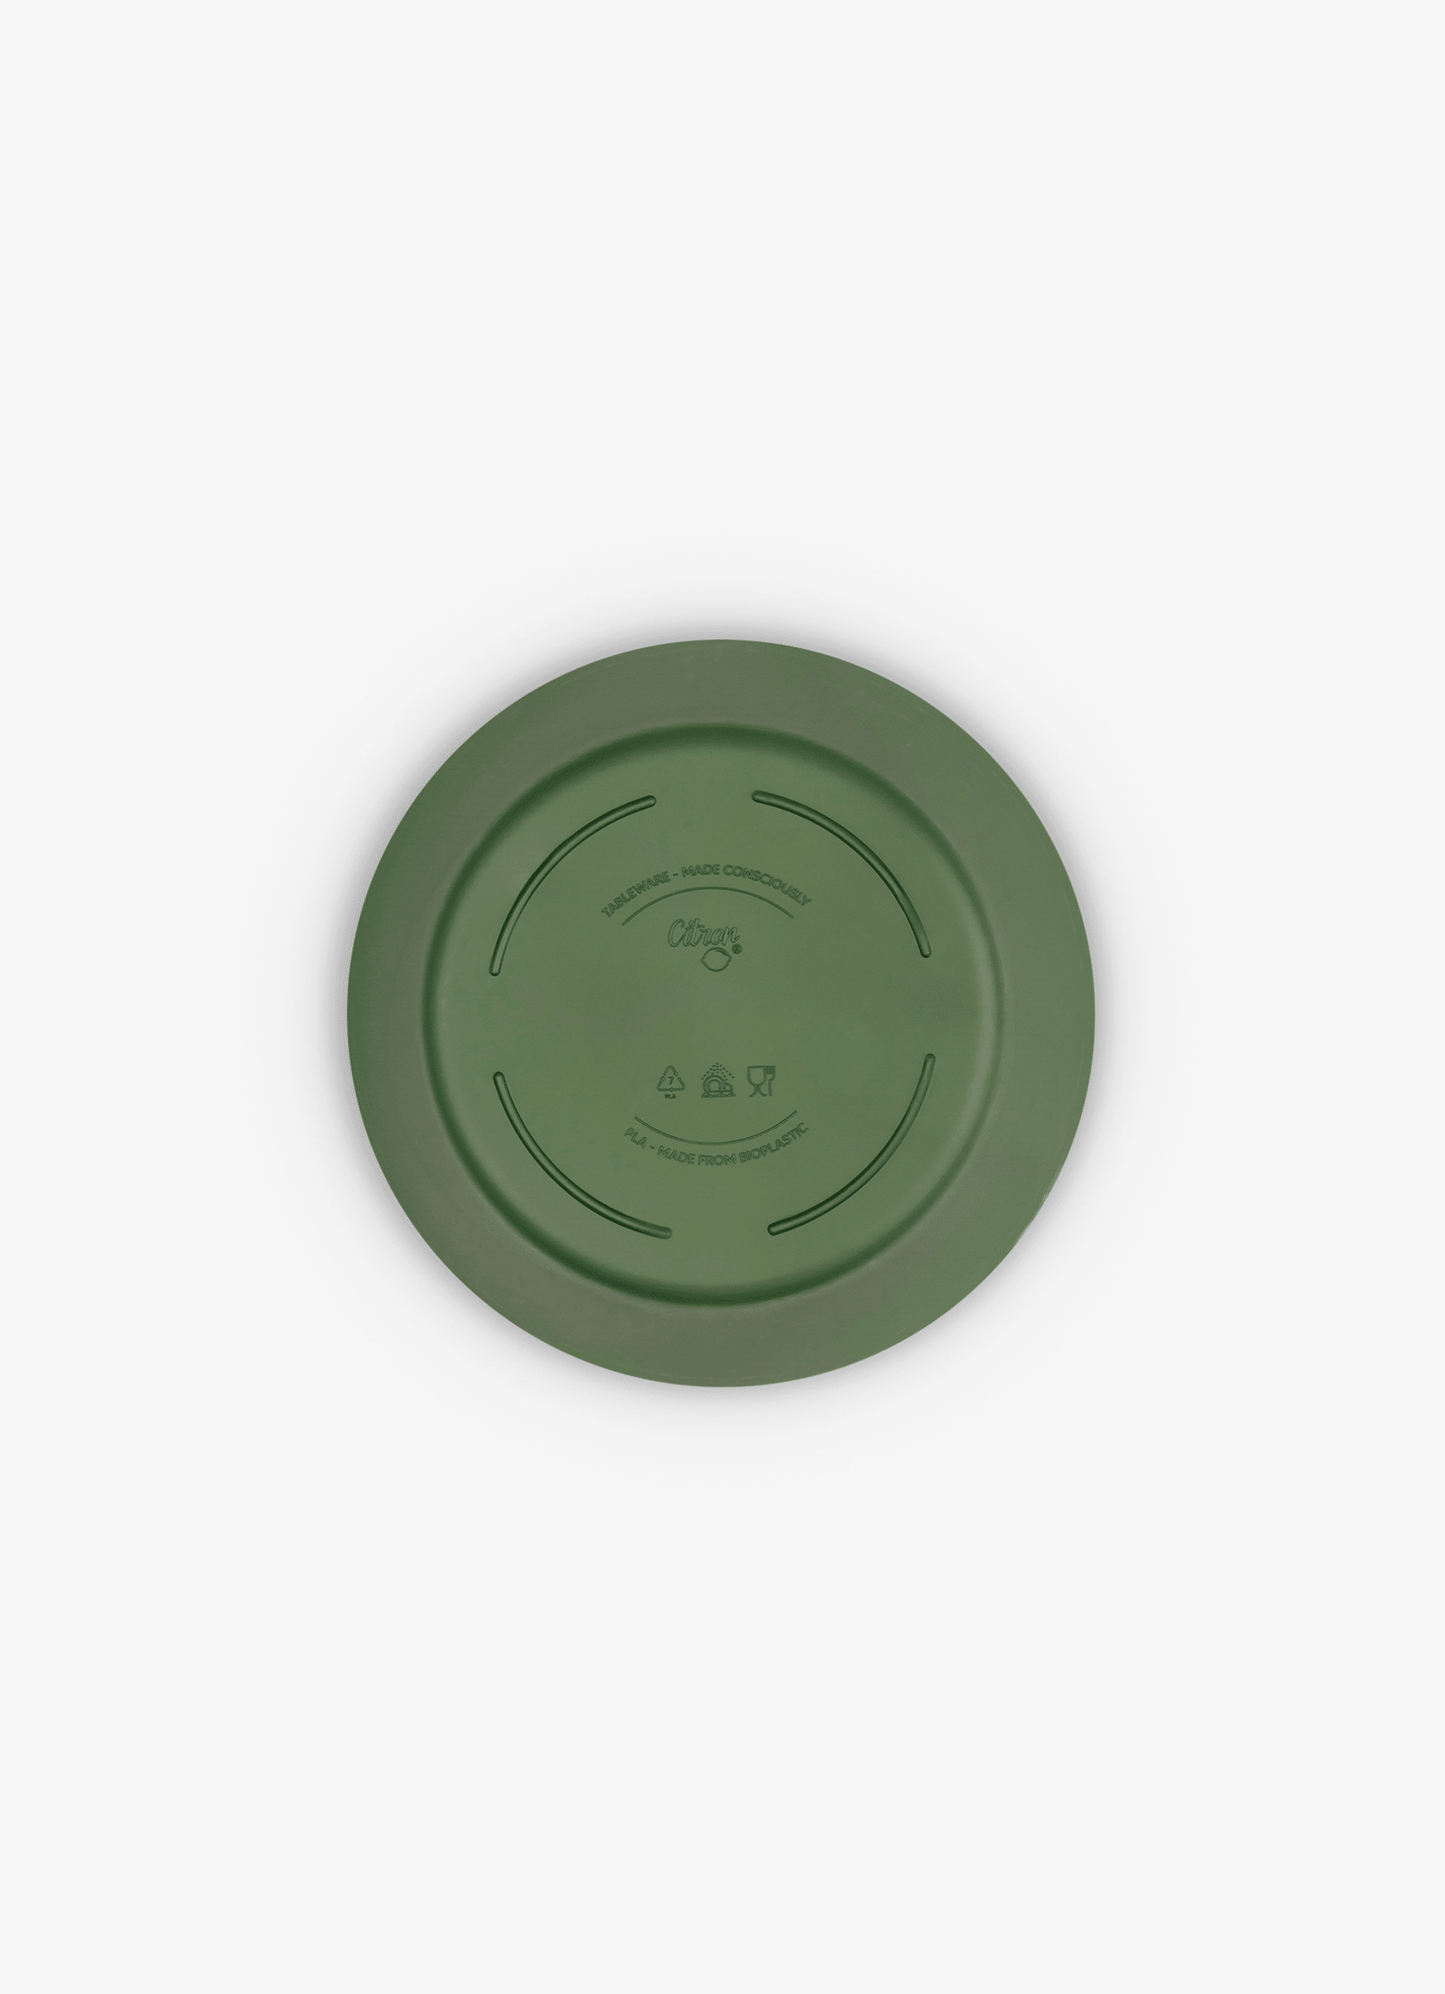 Bio Based Bowls - Set of 4 - Green/ Cream